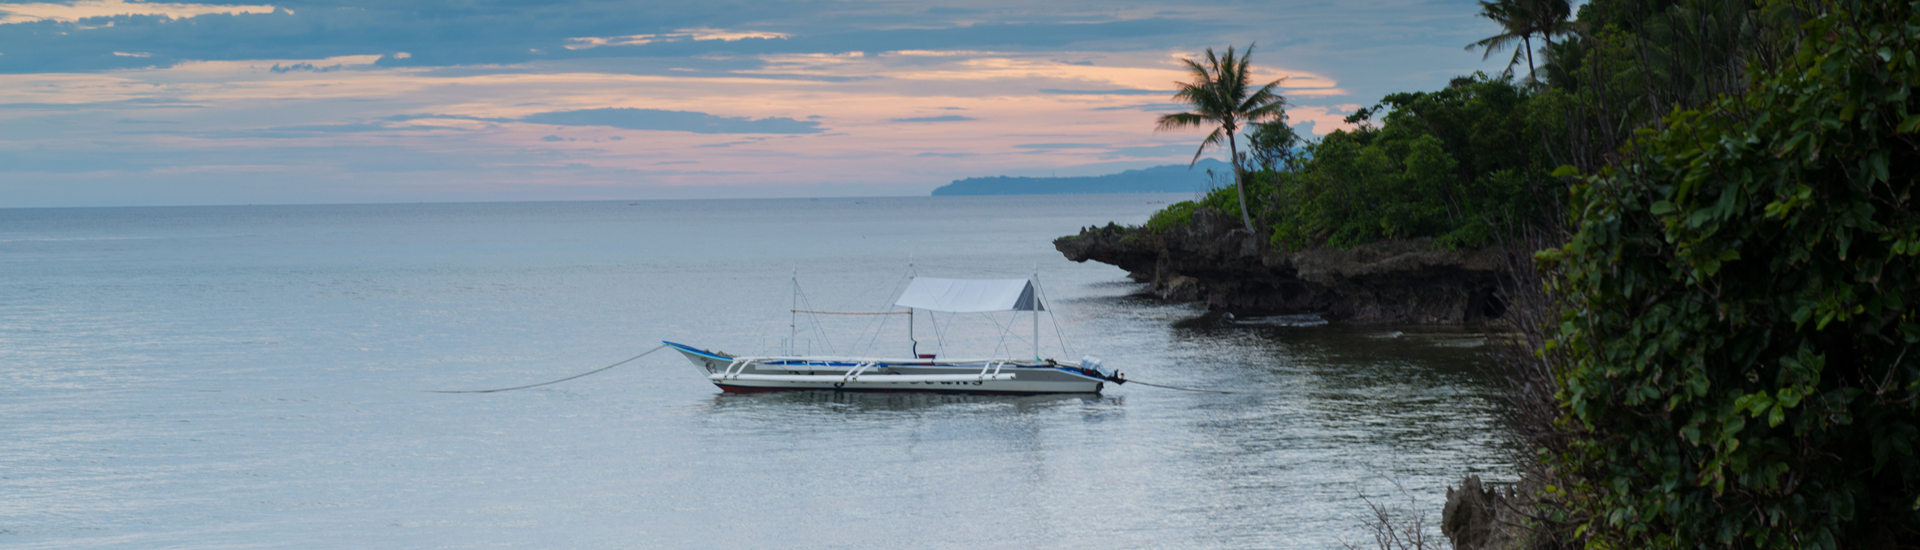 Philippine sunset at Bohol